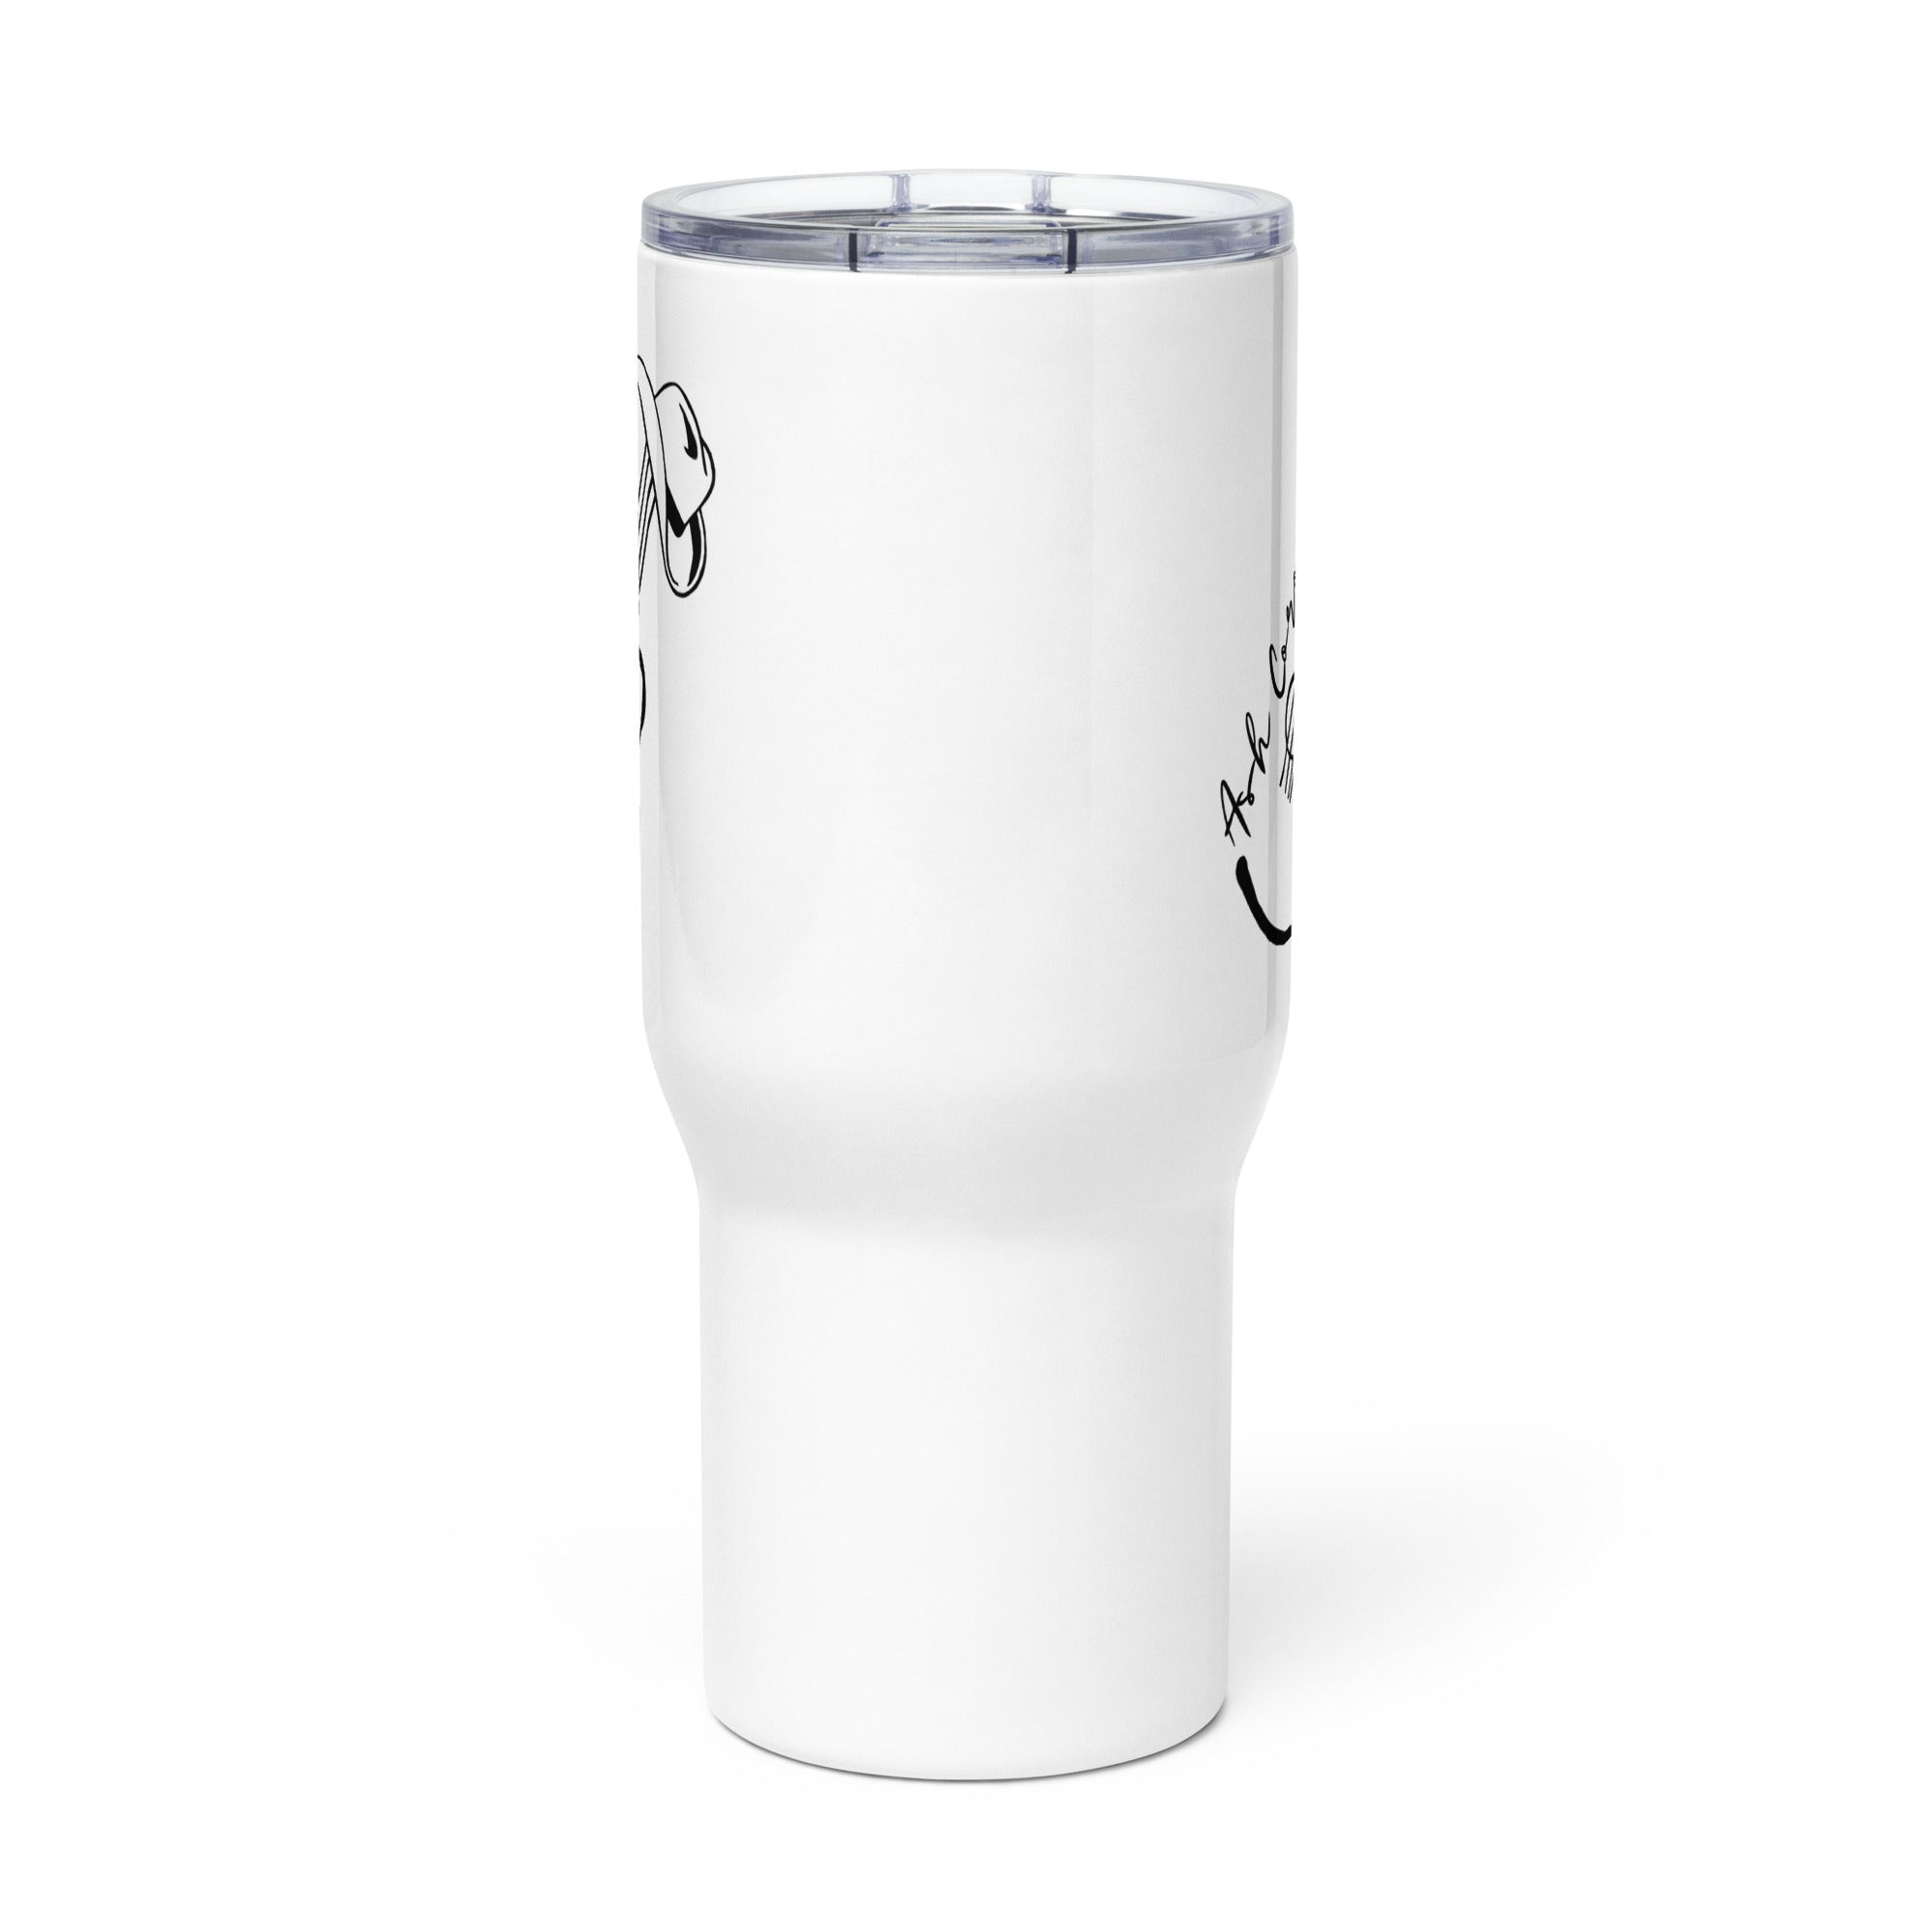 Ash Coronado - Travel mug with a handle